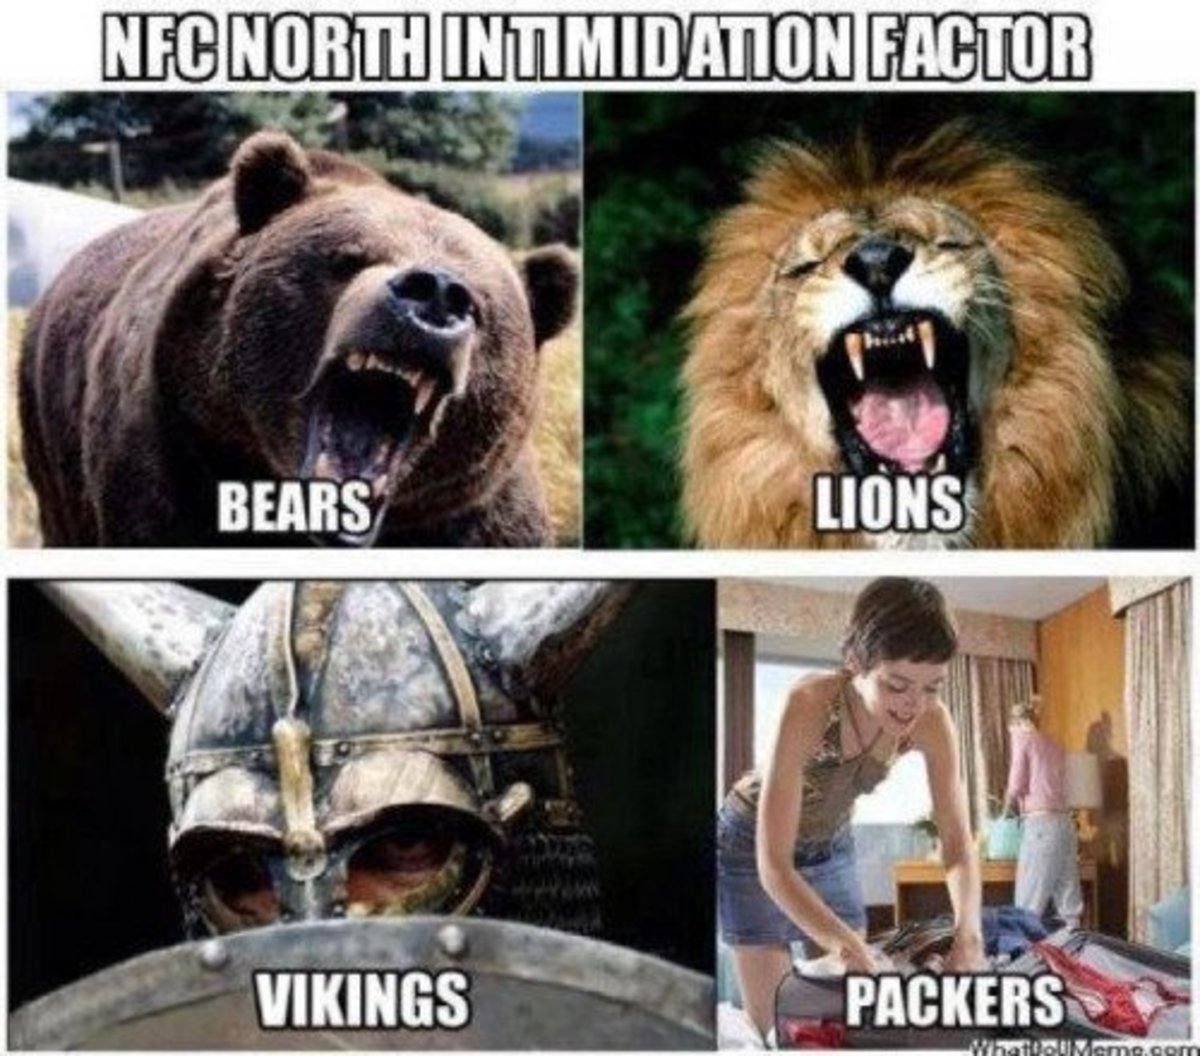 Green Bay Packers Meme